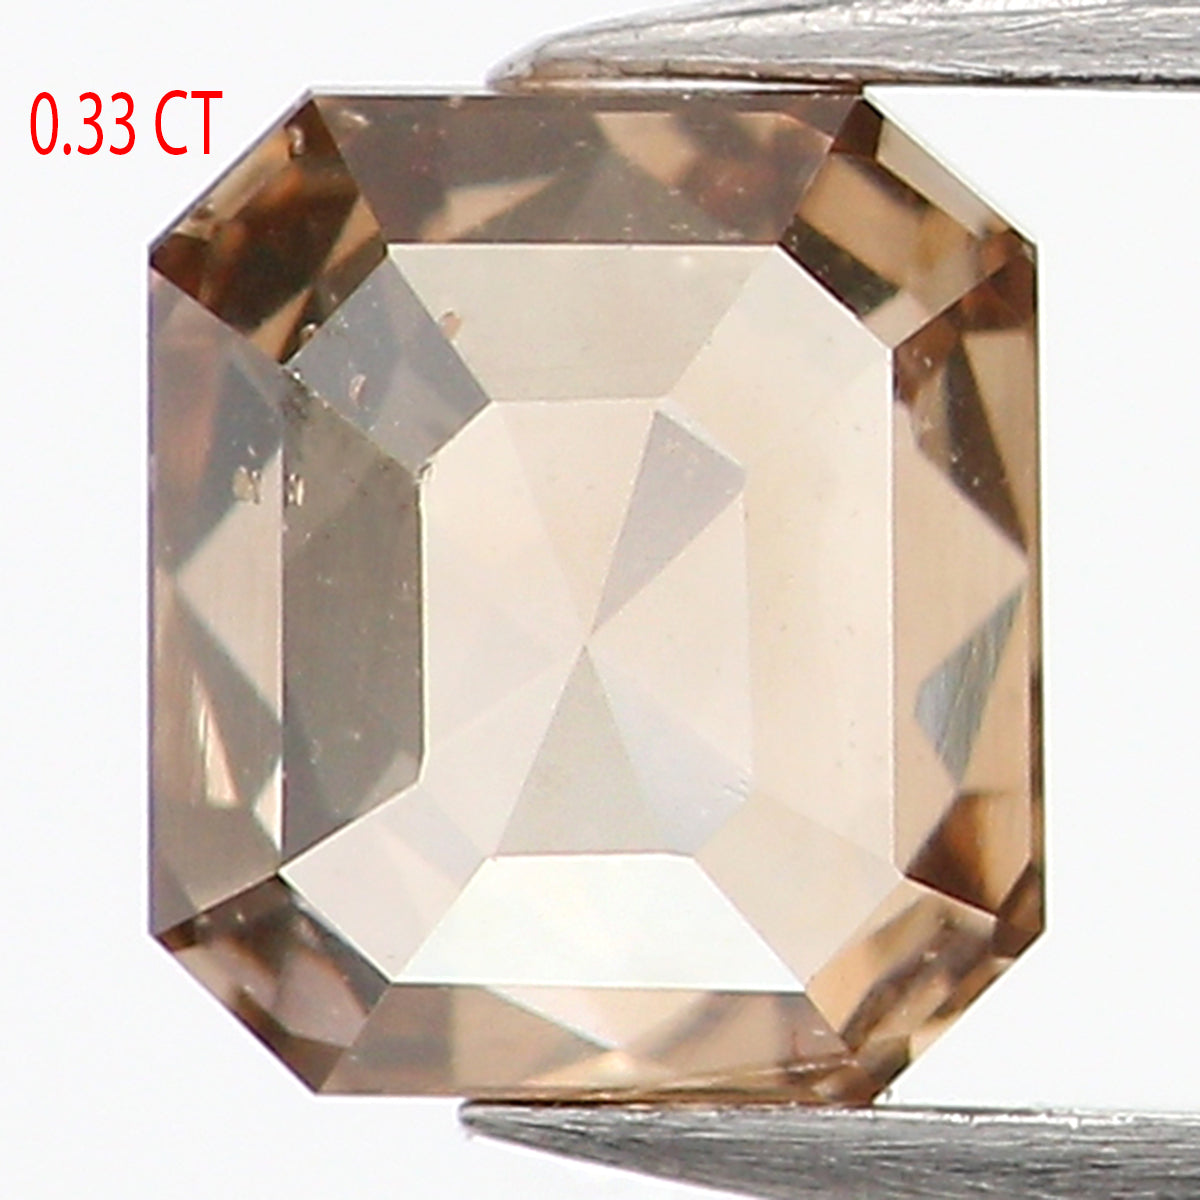 0.33 Ct Natural Loose Diamond, Emerald Cut Diamond, Brown Diamond, Polished Diamond, Rose Cut Diamond, Rustic Diamond, Antique Diamond L769